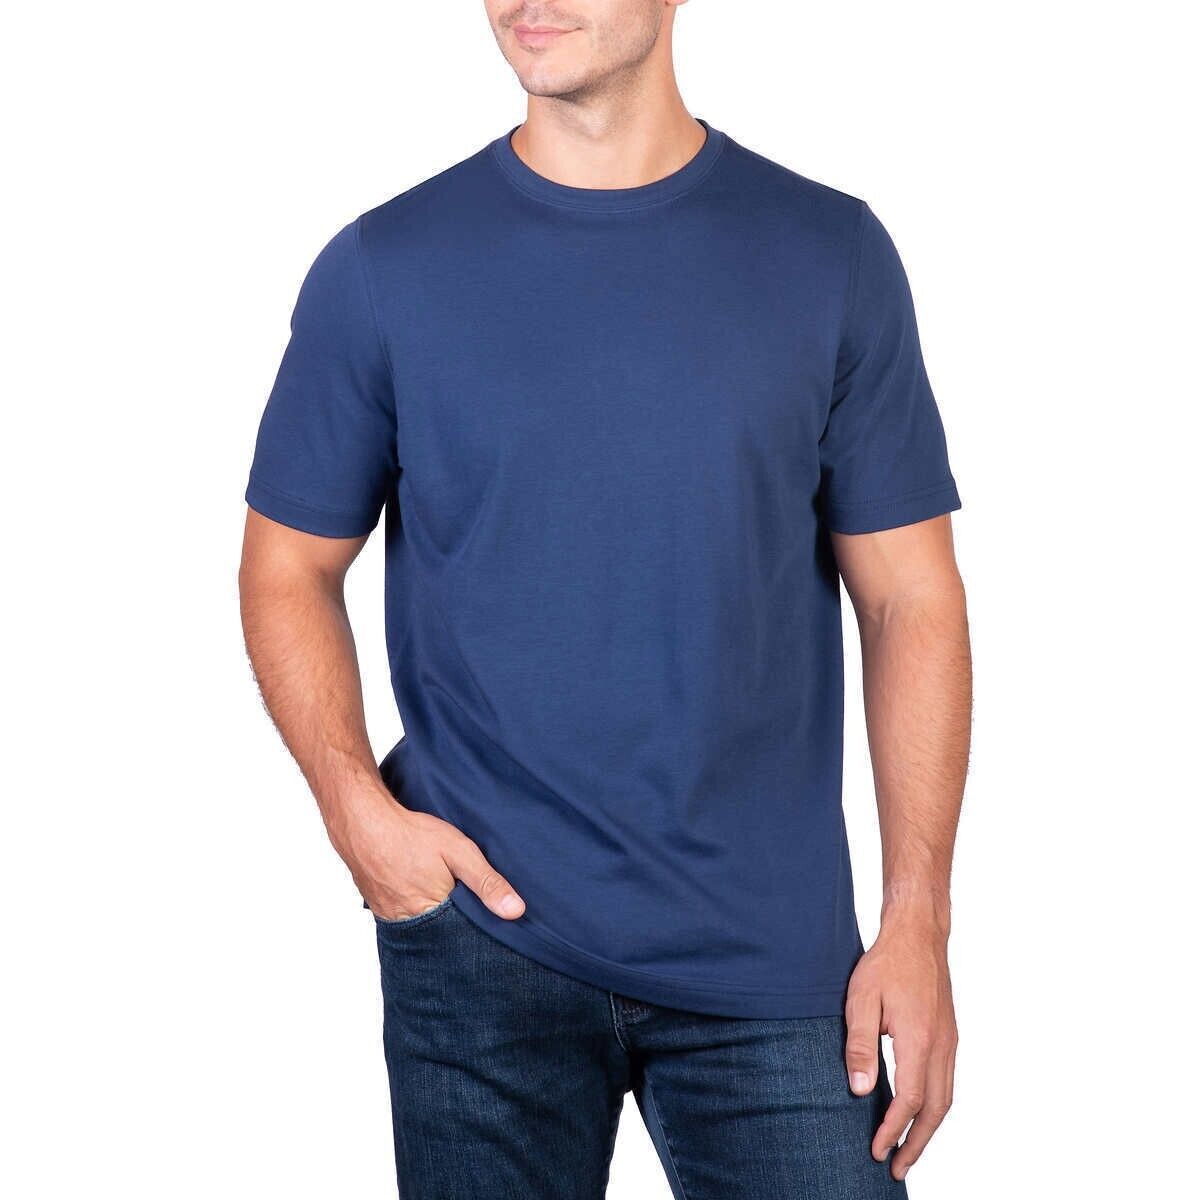 Kirkland Signature Men's Short Sleeve Peruvian Pima Cotton T-Shirt (Navy, Large)